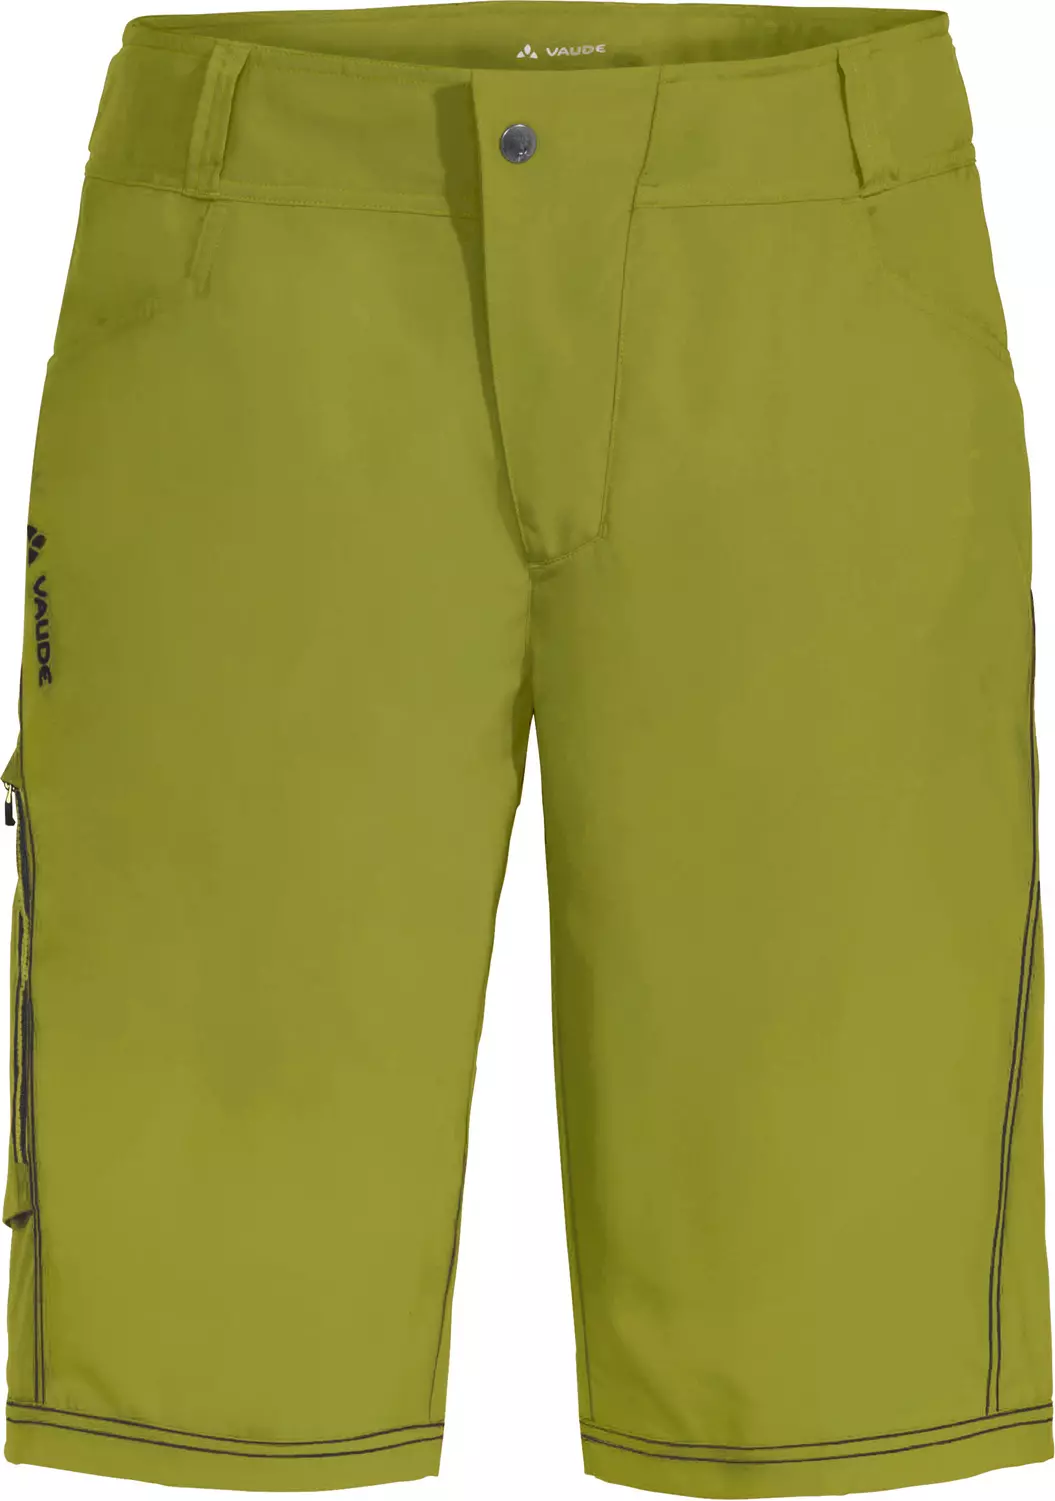 Men\'s bicycle - MEN\'S shorts Dystrybutor green Ledro Gadżety VAUDE with CLOTHING Red | \\ Bird \\ Vaude Markowe odzież insole i CYCLING reklamowa Green BRANDS 